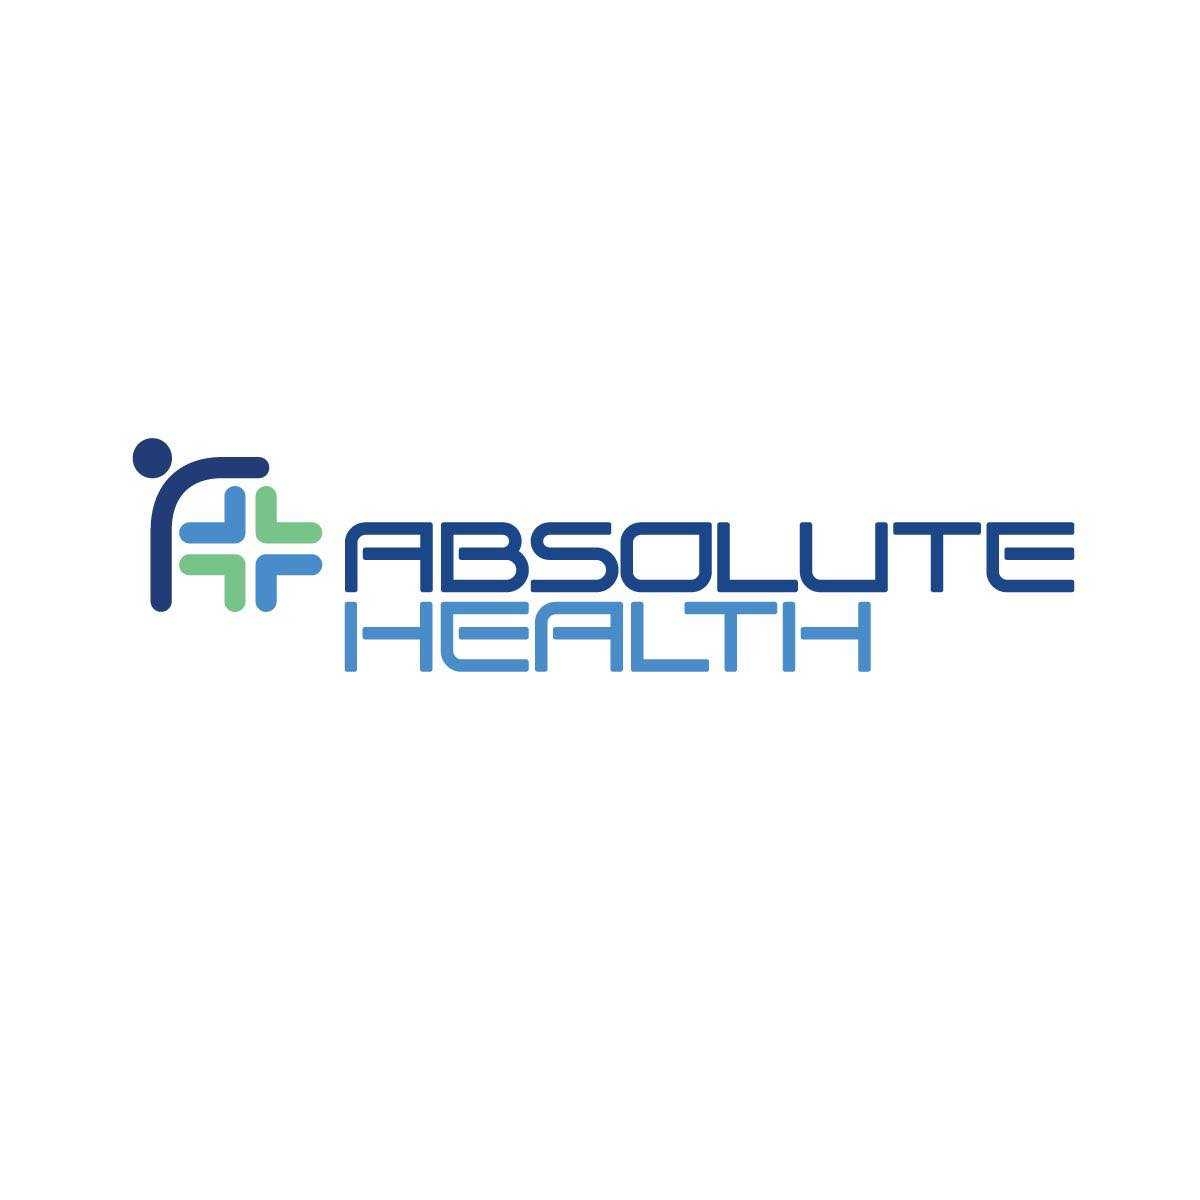 Absolute Health Clinic